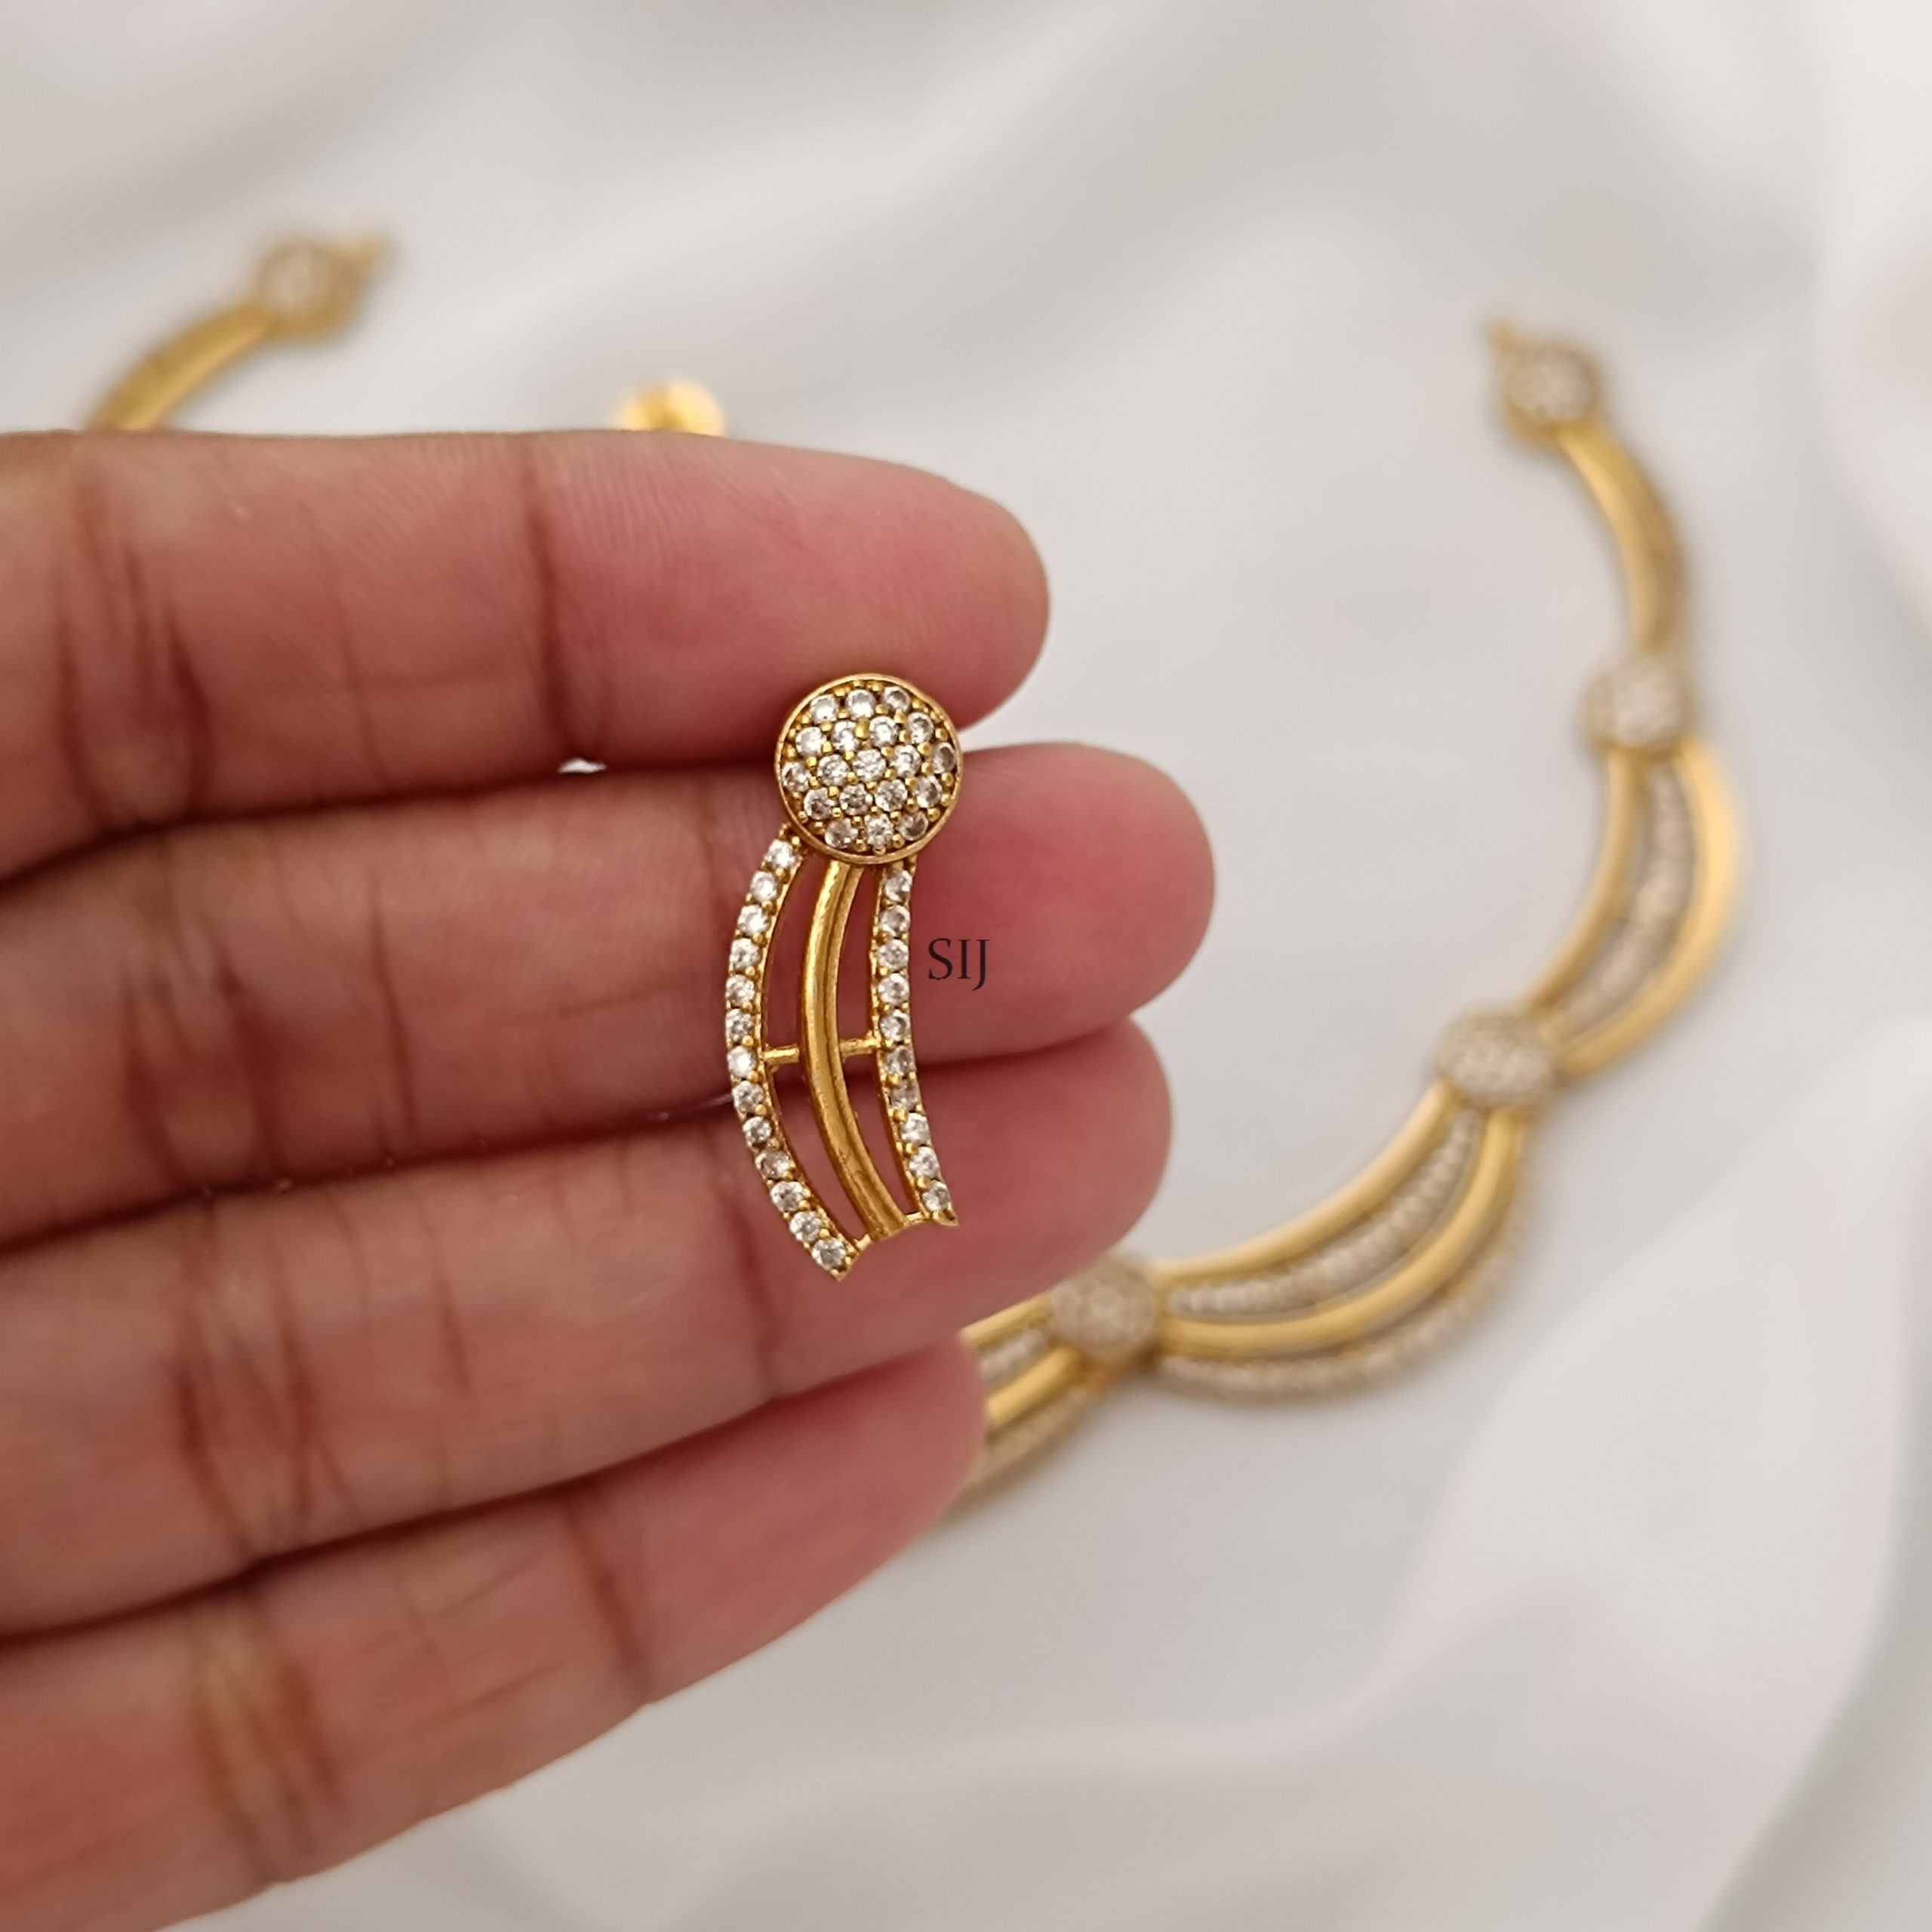 Imitation Stone Ring Layer Necklace